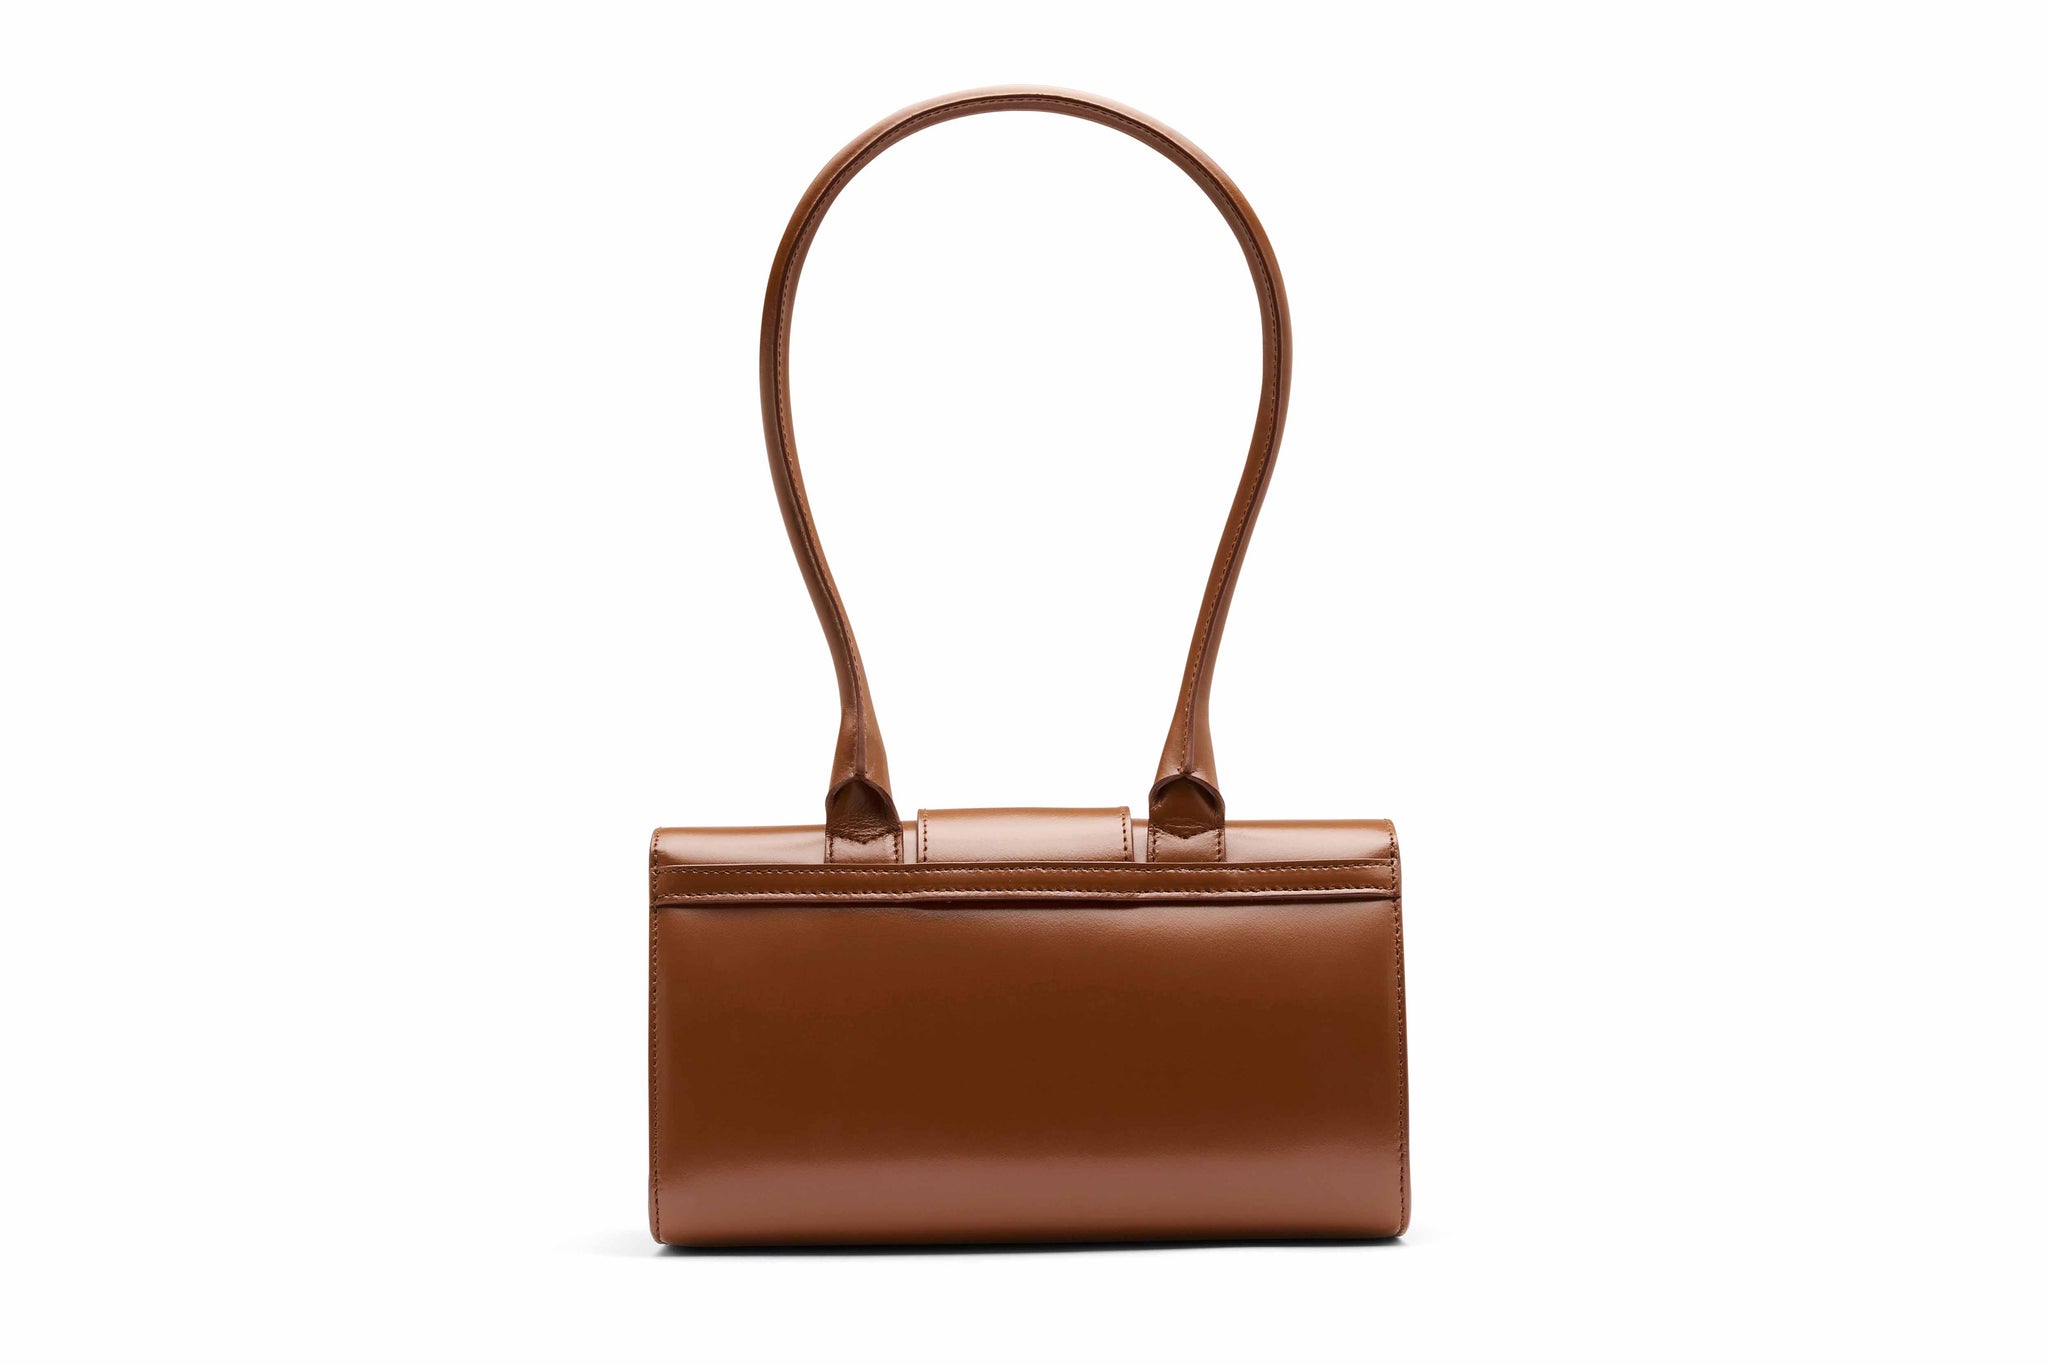 Rylan, Rylan Studio, Cognac Small Satchel with Long Handle, Leather Handbag, Made in Italy, Leather Handbag